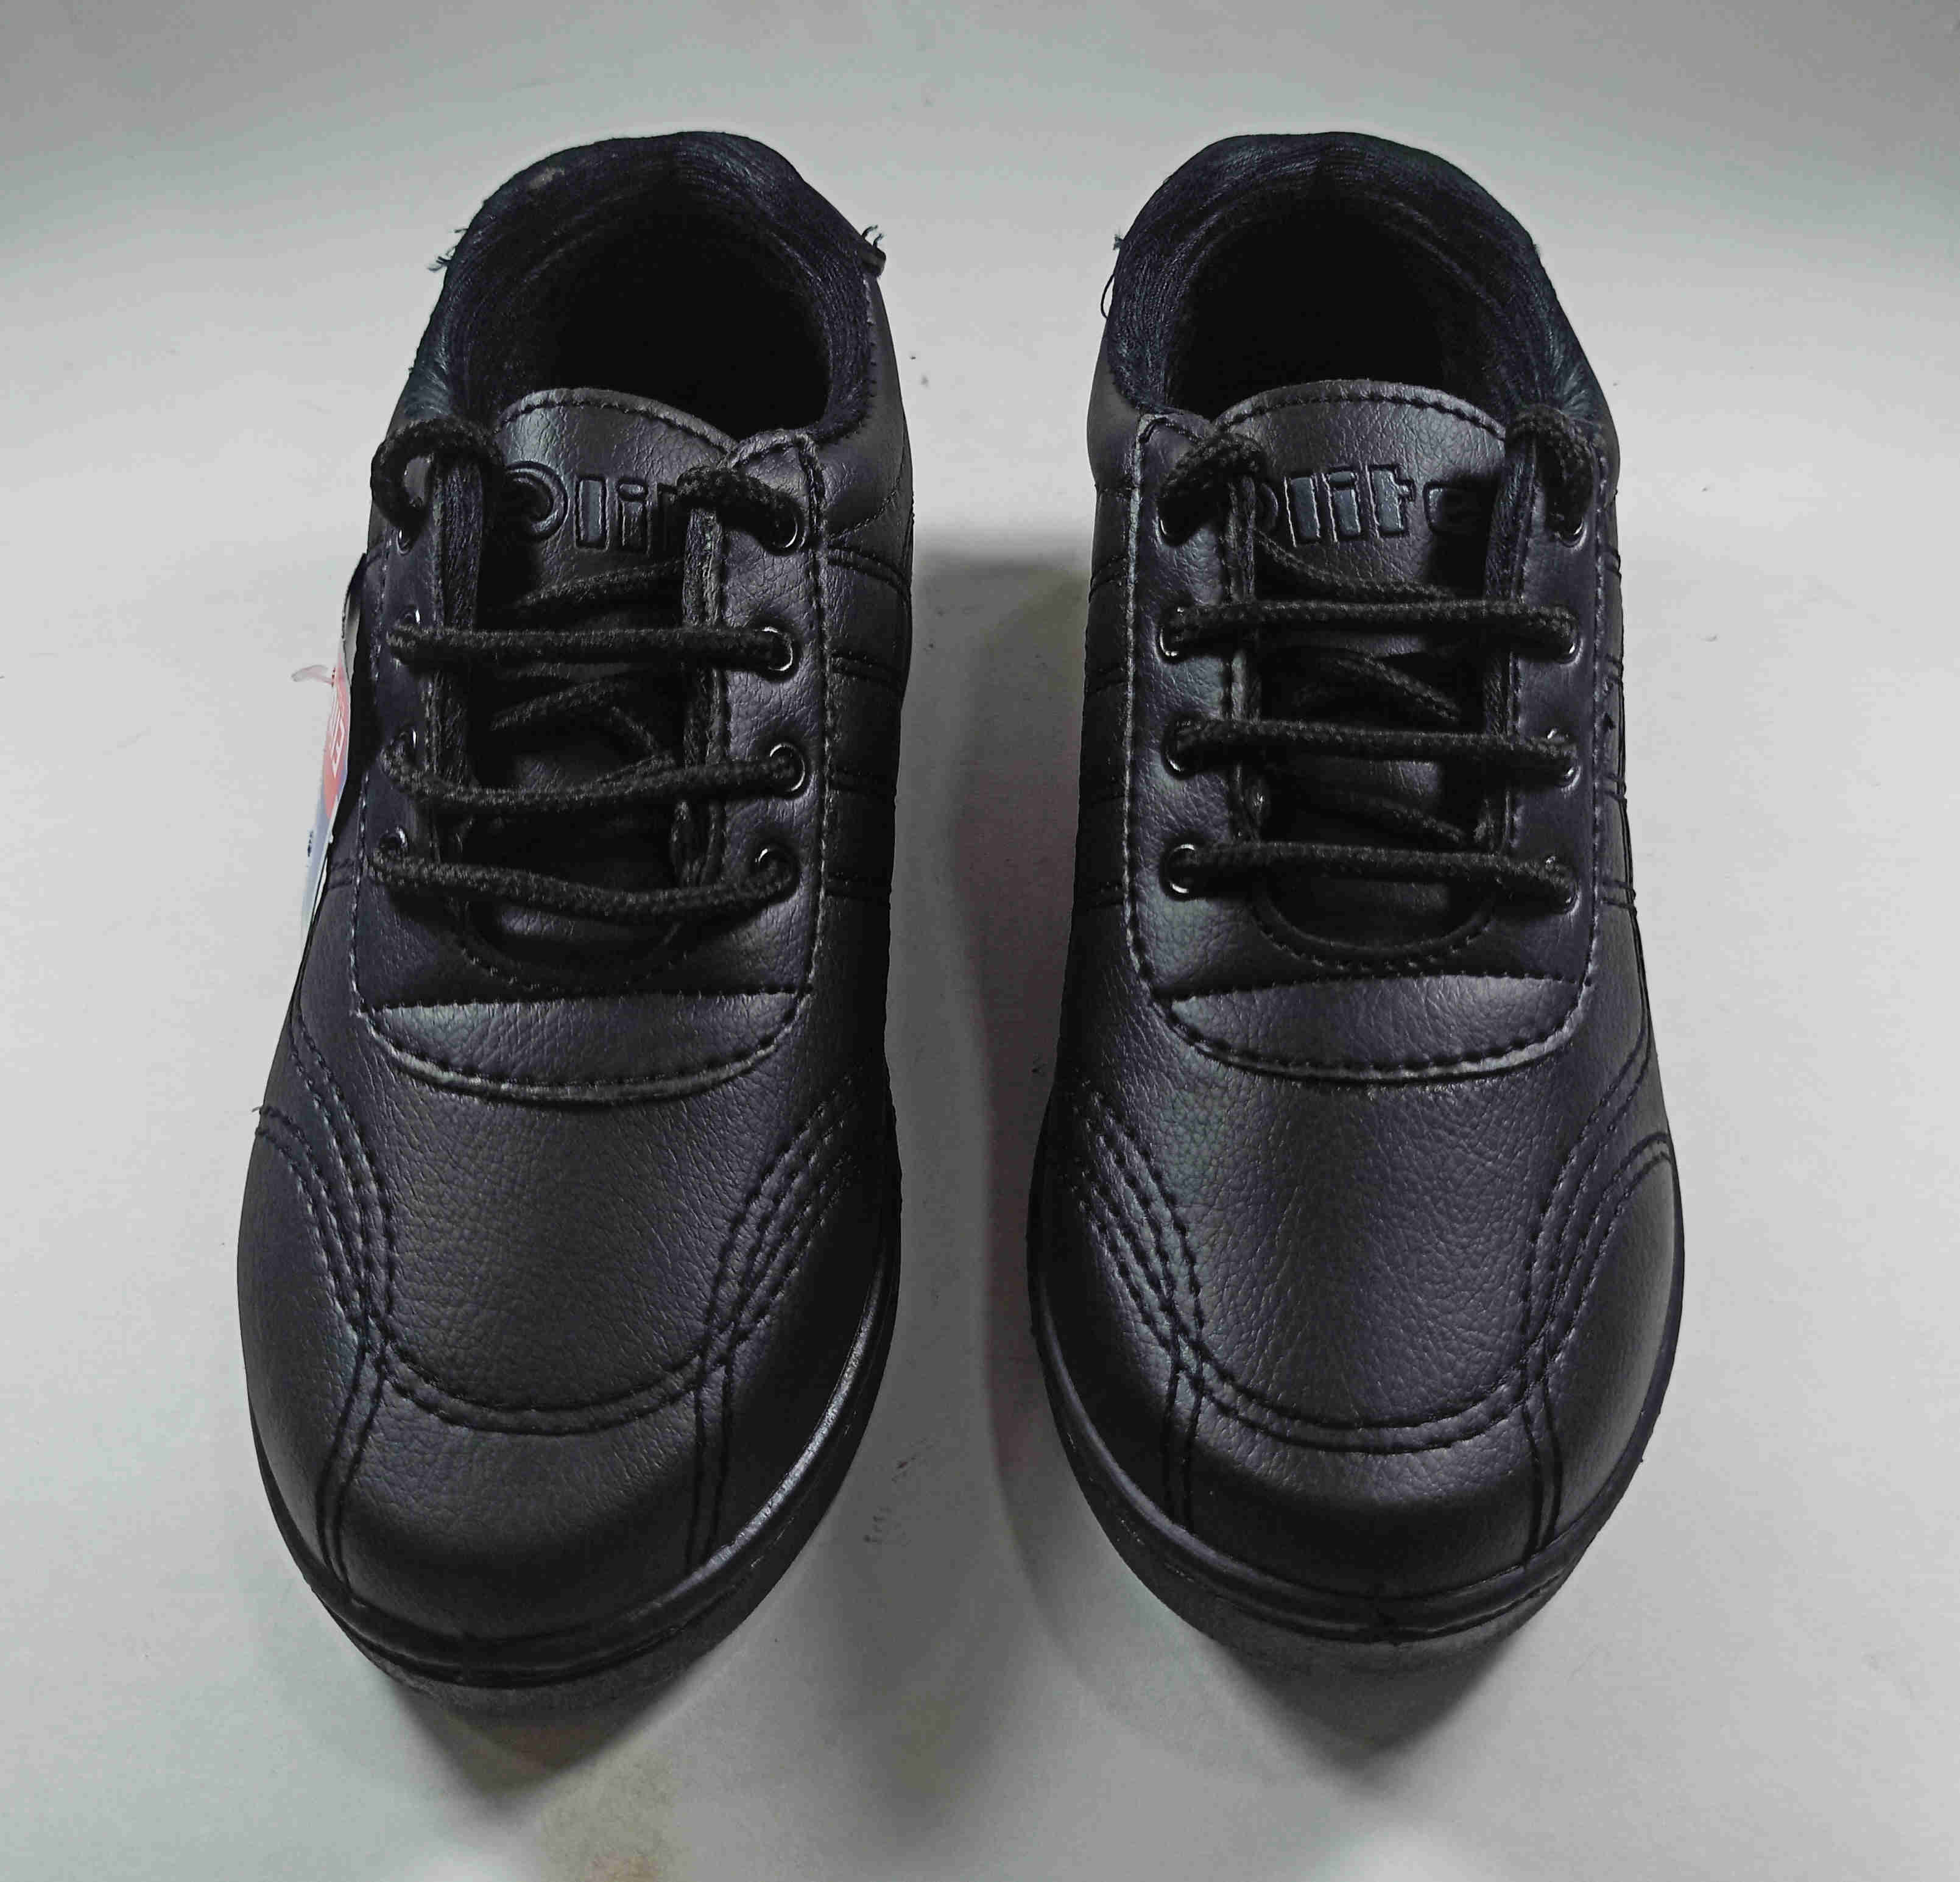 School Jogger Shoes Black Gents Sizes 